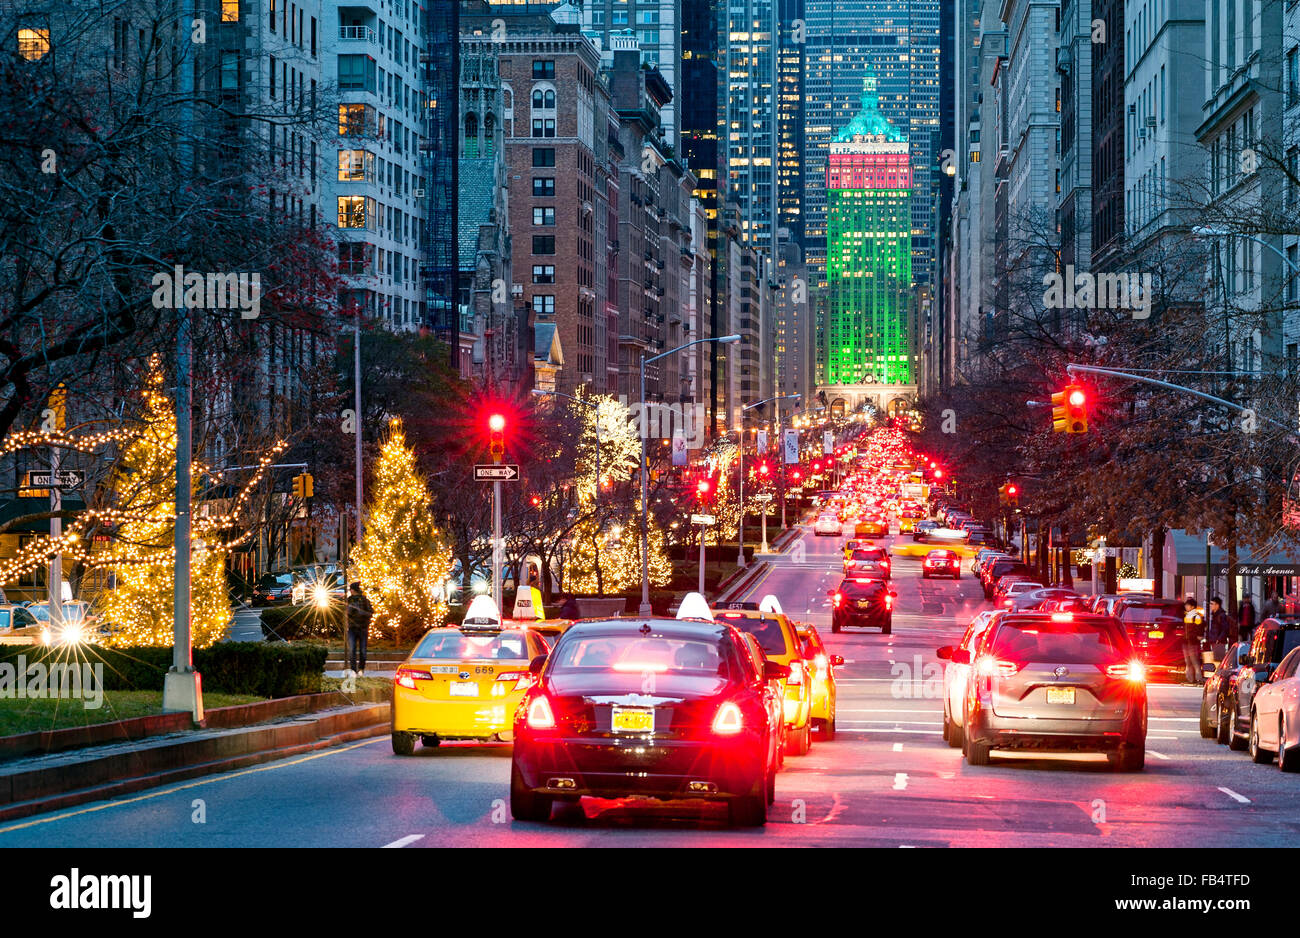 New York New York Street Park Avenue New York City Décorations Trafic d'arbres de Noël Banque D'Images